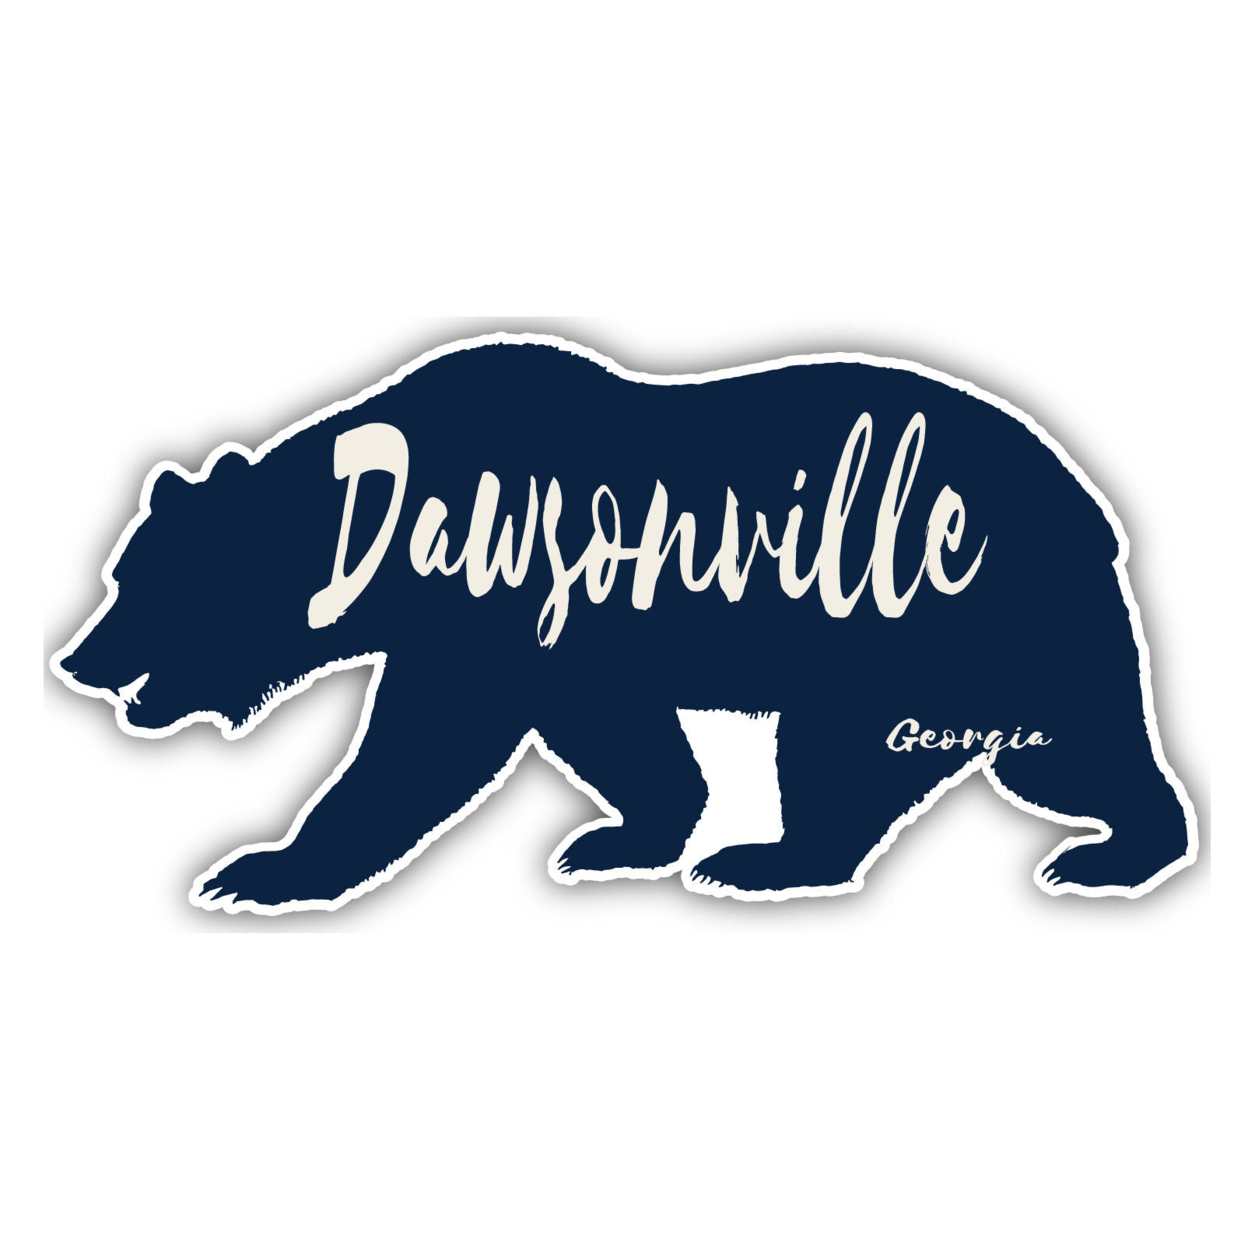 Dawsonville Georgia Souvenir Decorative Stickers (Choose Theme And Size) - Single Unit, 2-Inch, Bear